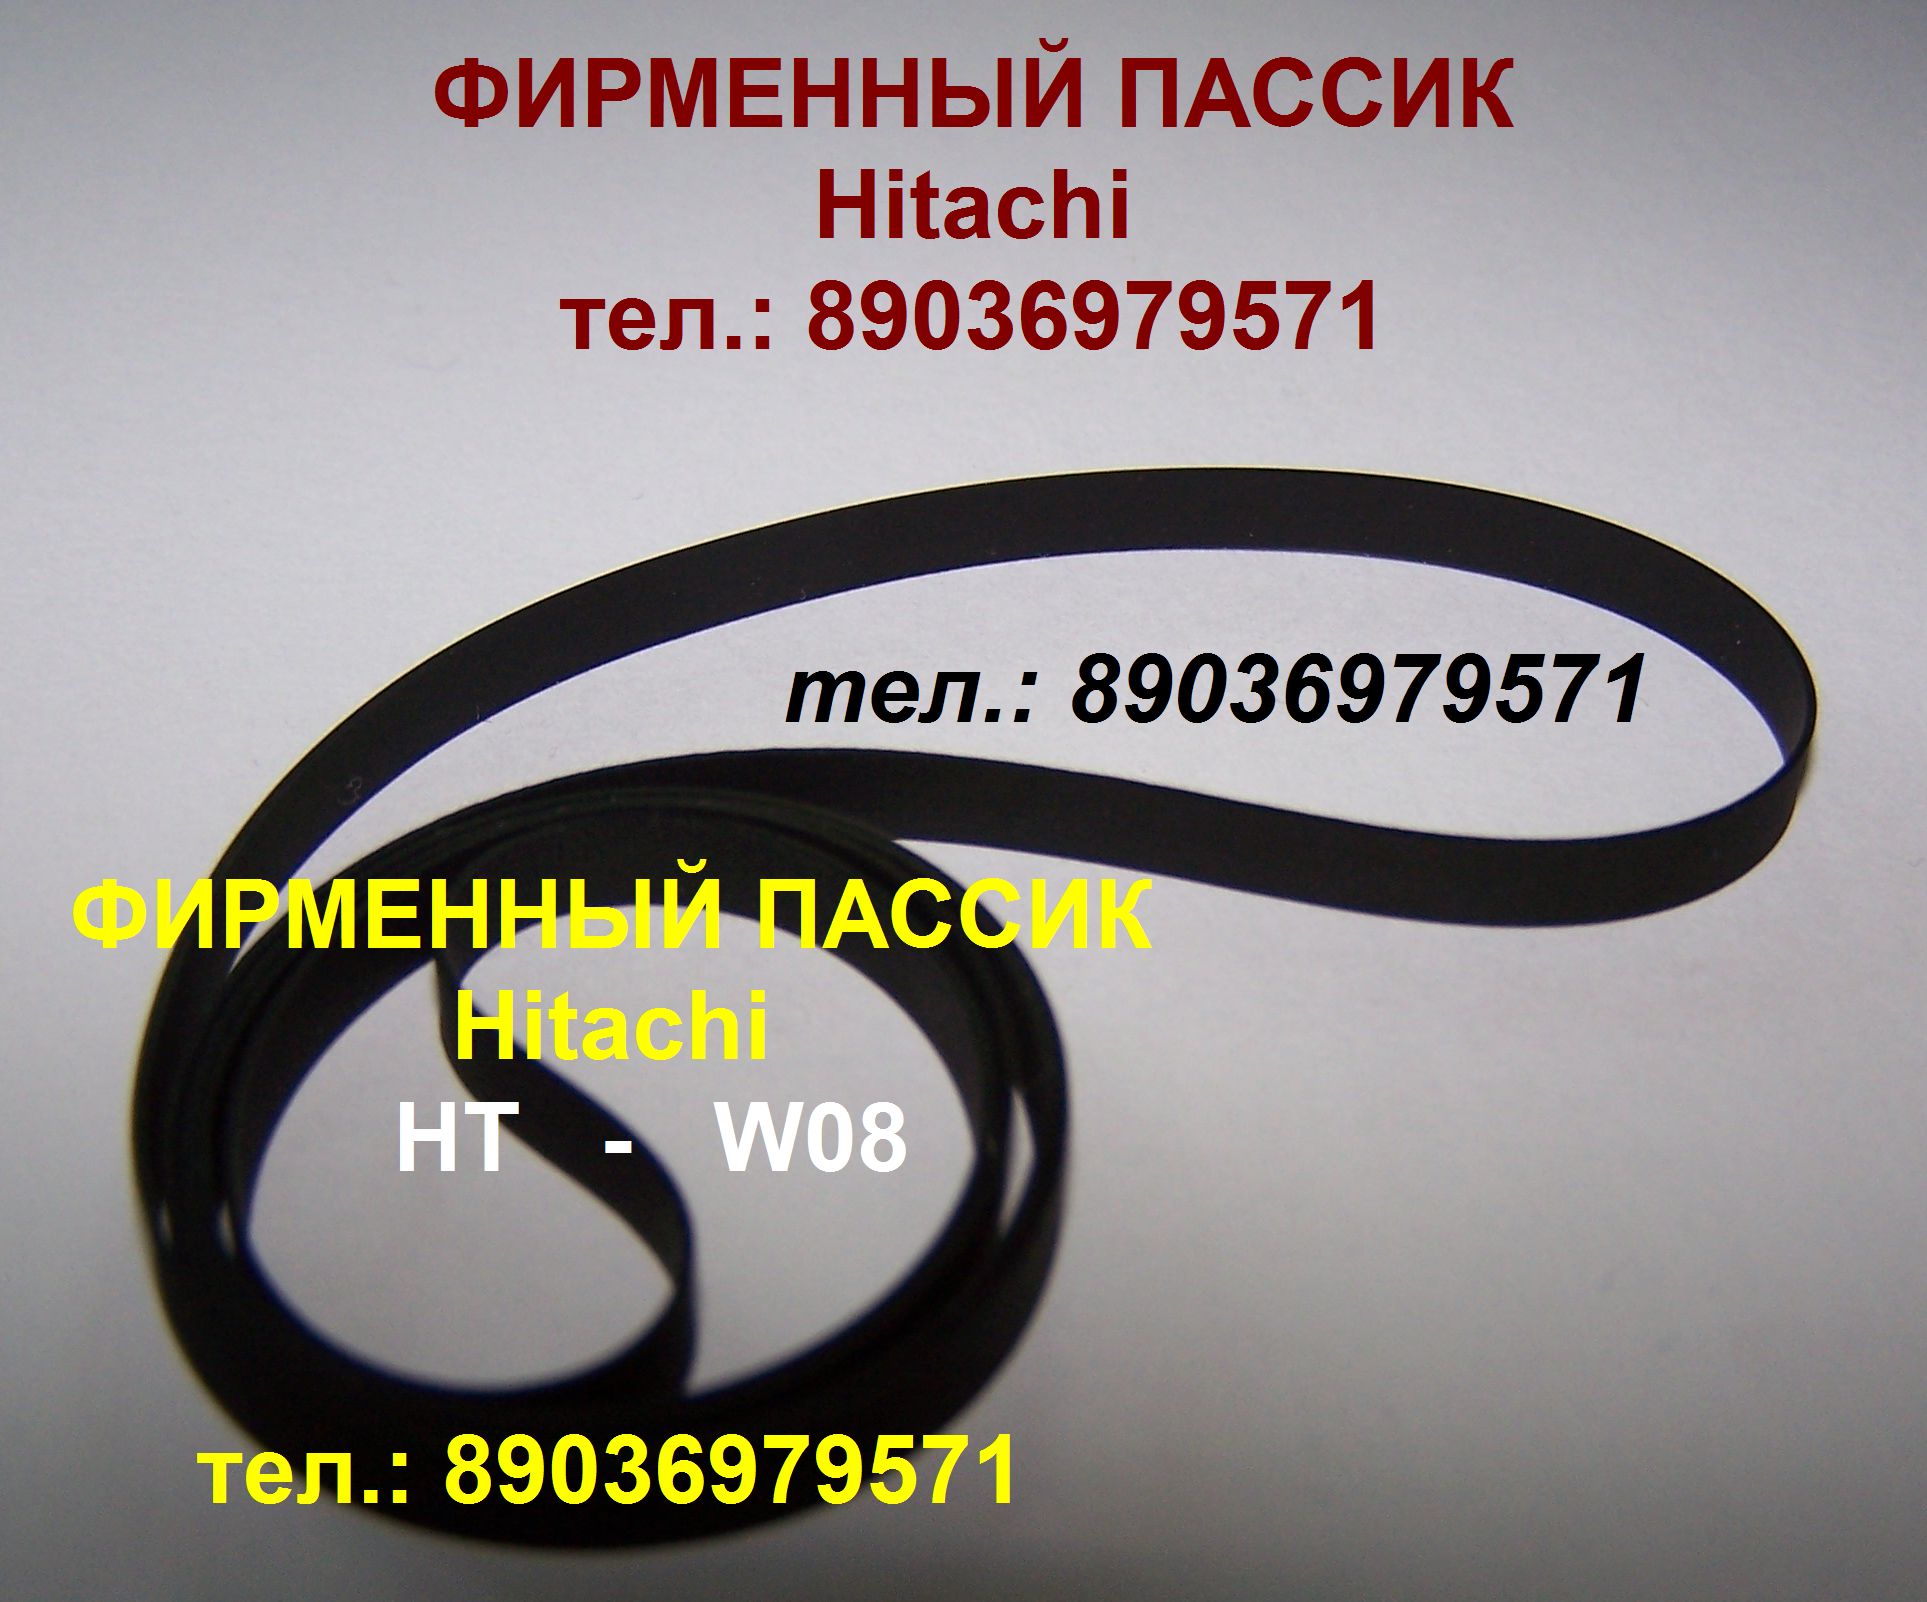 пассик для Hitachi HT-W08 пасик Хитачи HTW08 Hitachi HT W 08 ремень в городе Москва, фото 1, телефон продавца: +7 (903) 697-95-71